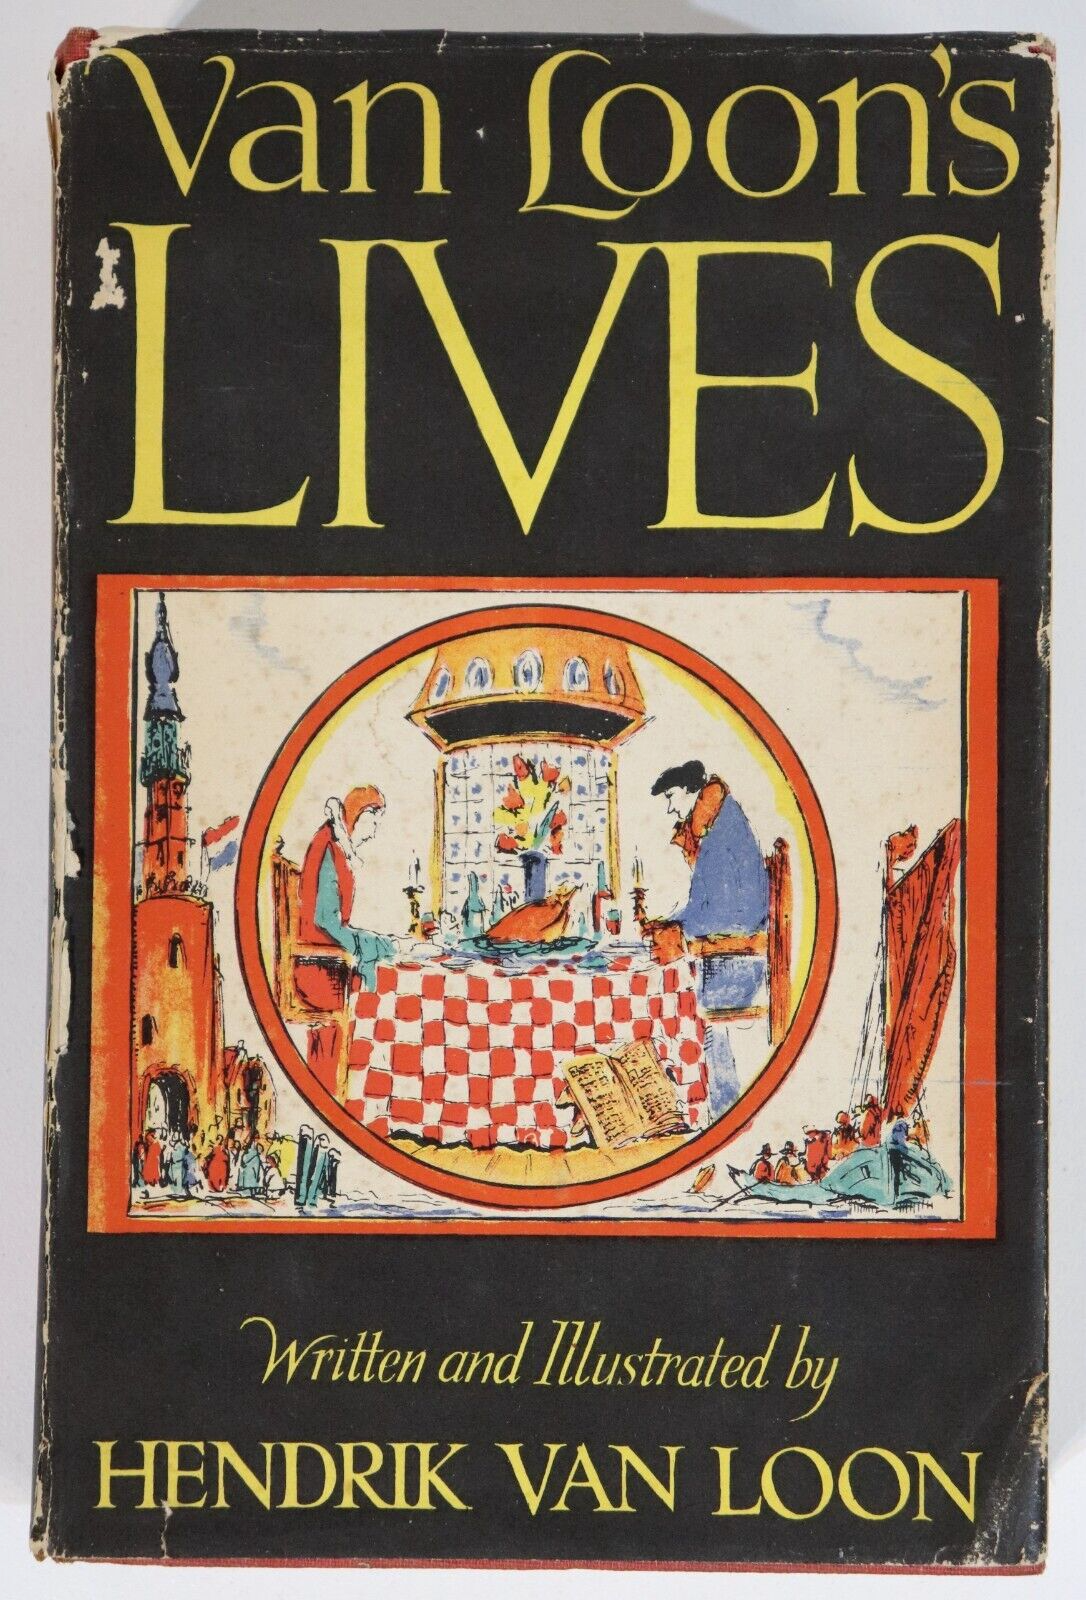 Van Loon's Lives - 1950 - World History & Biography Book